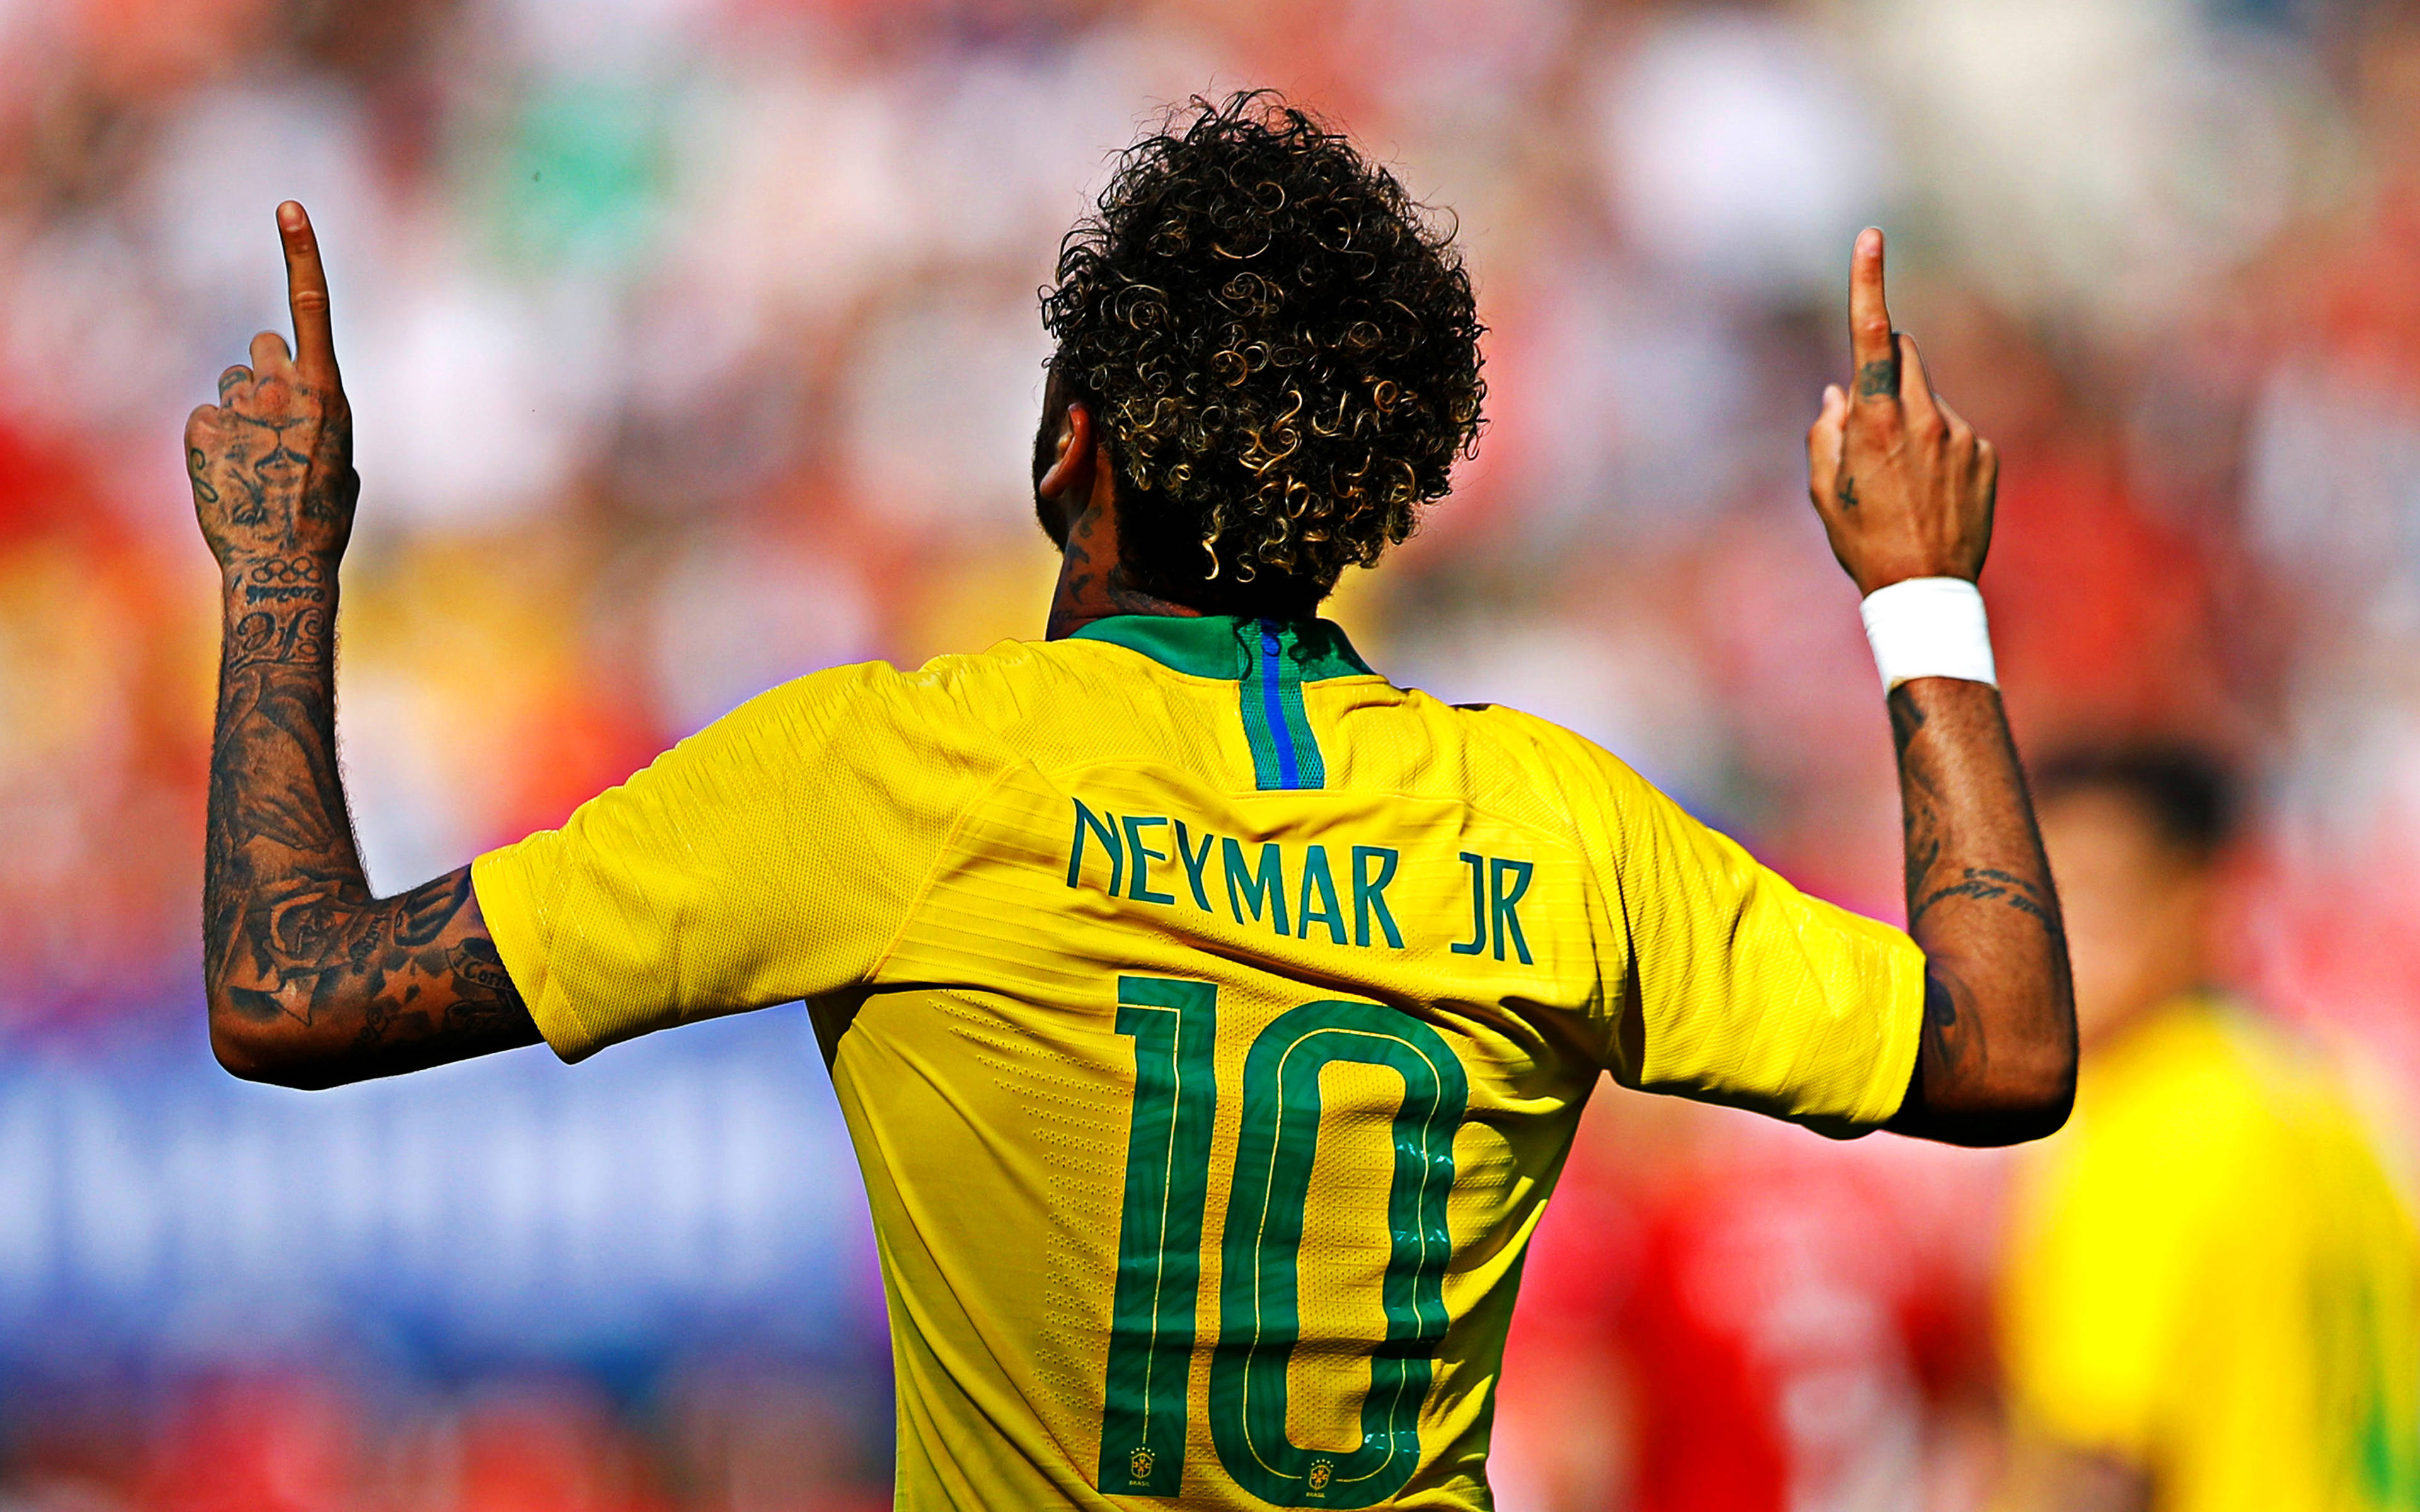 Cool Neymar Jr Pointing Up Wallpaper